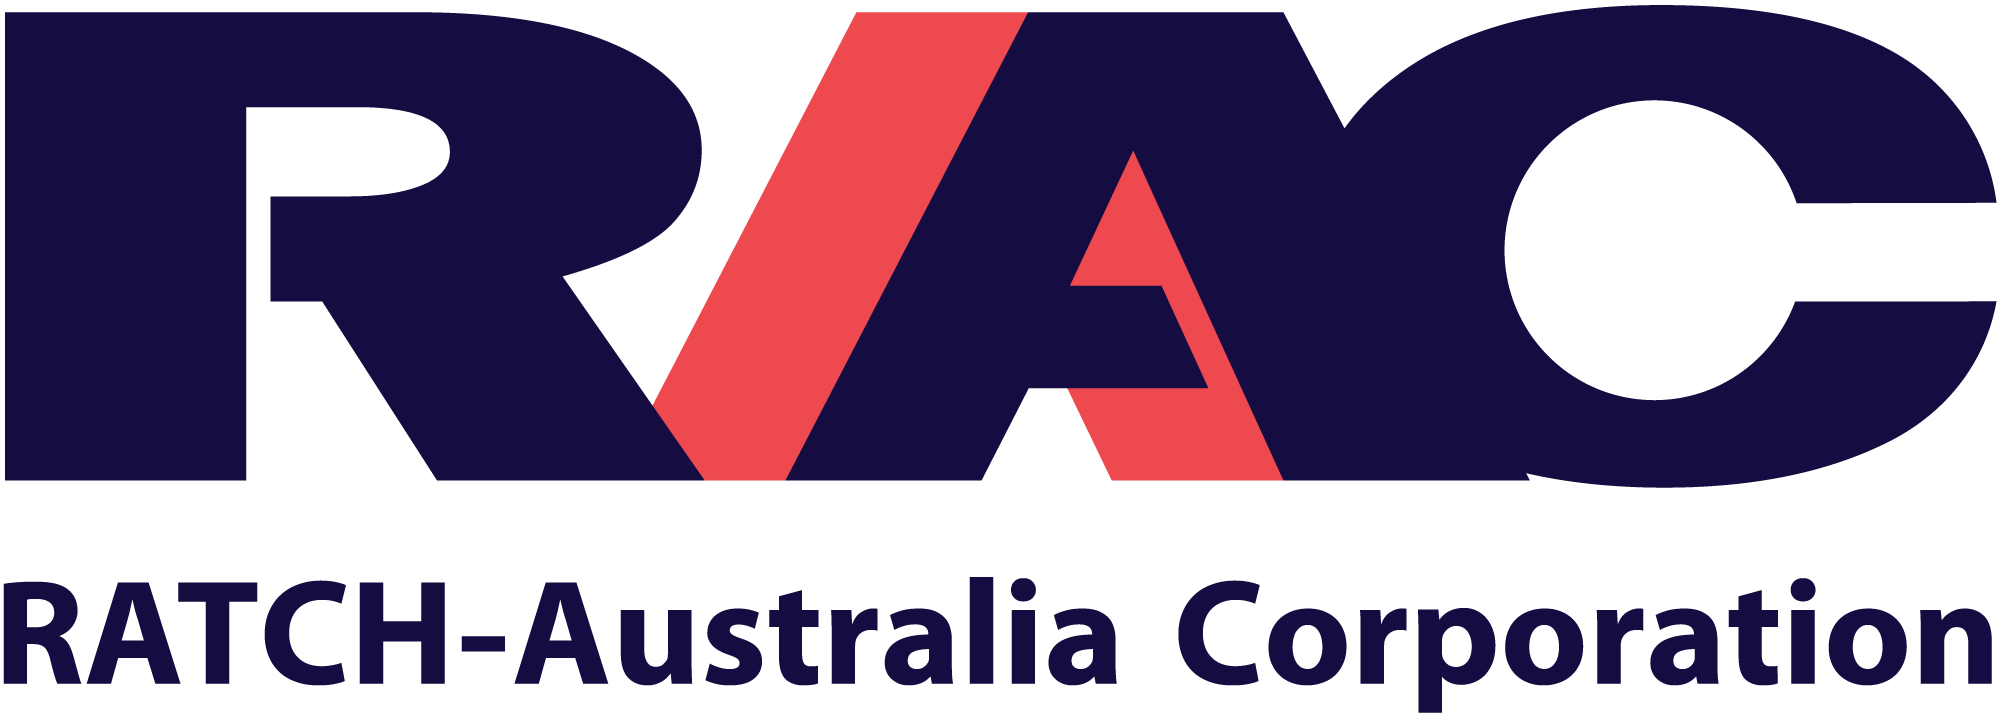 RATCH-Australia Corporation